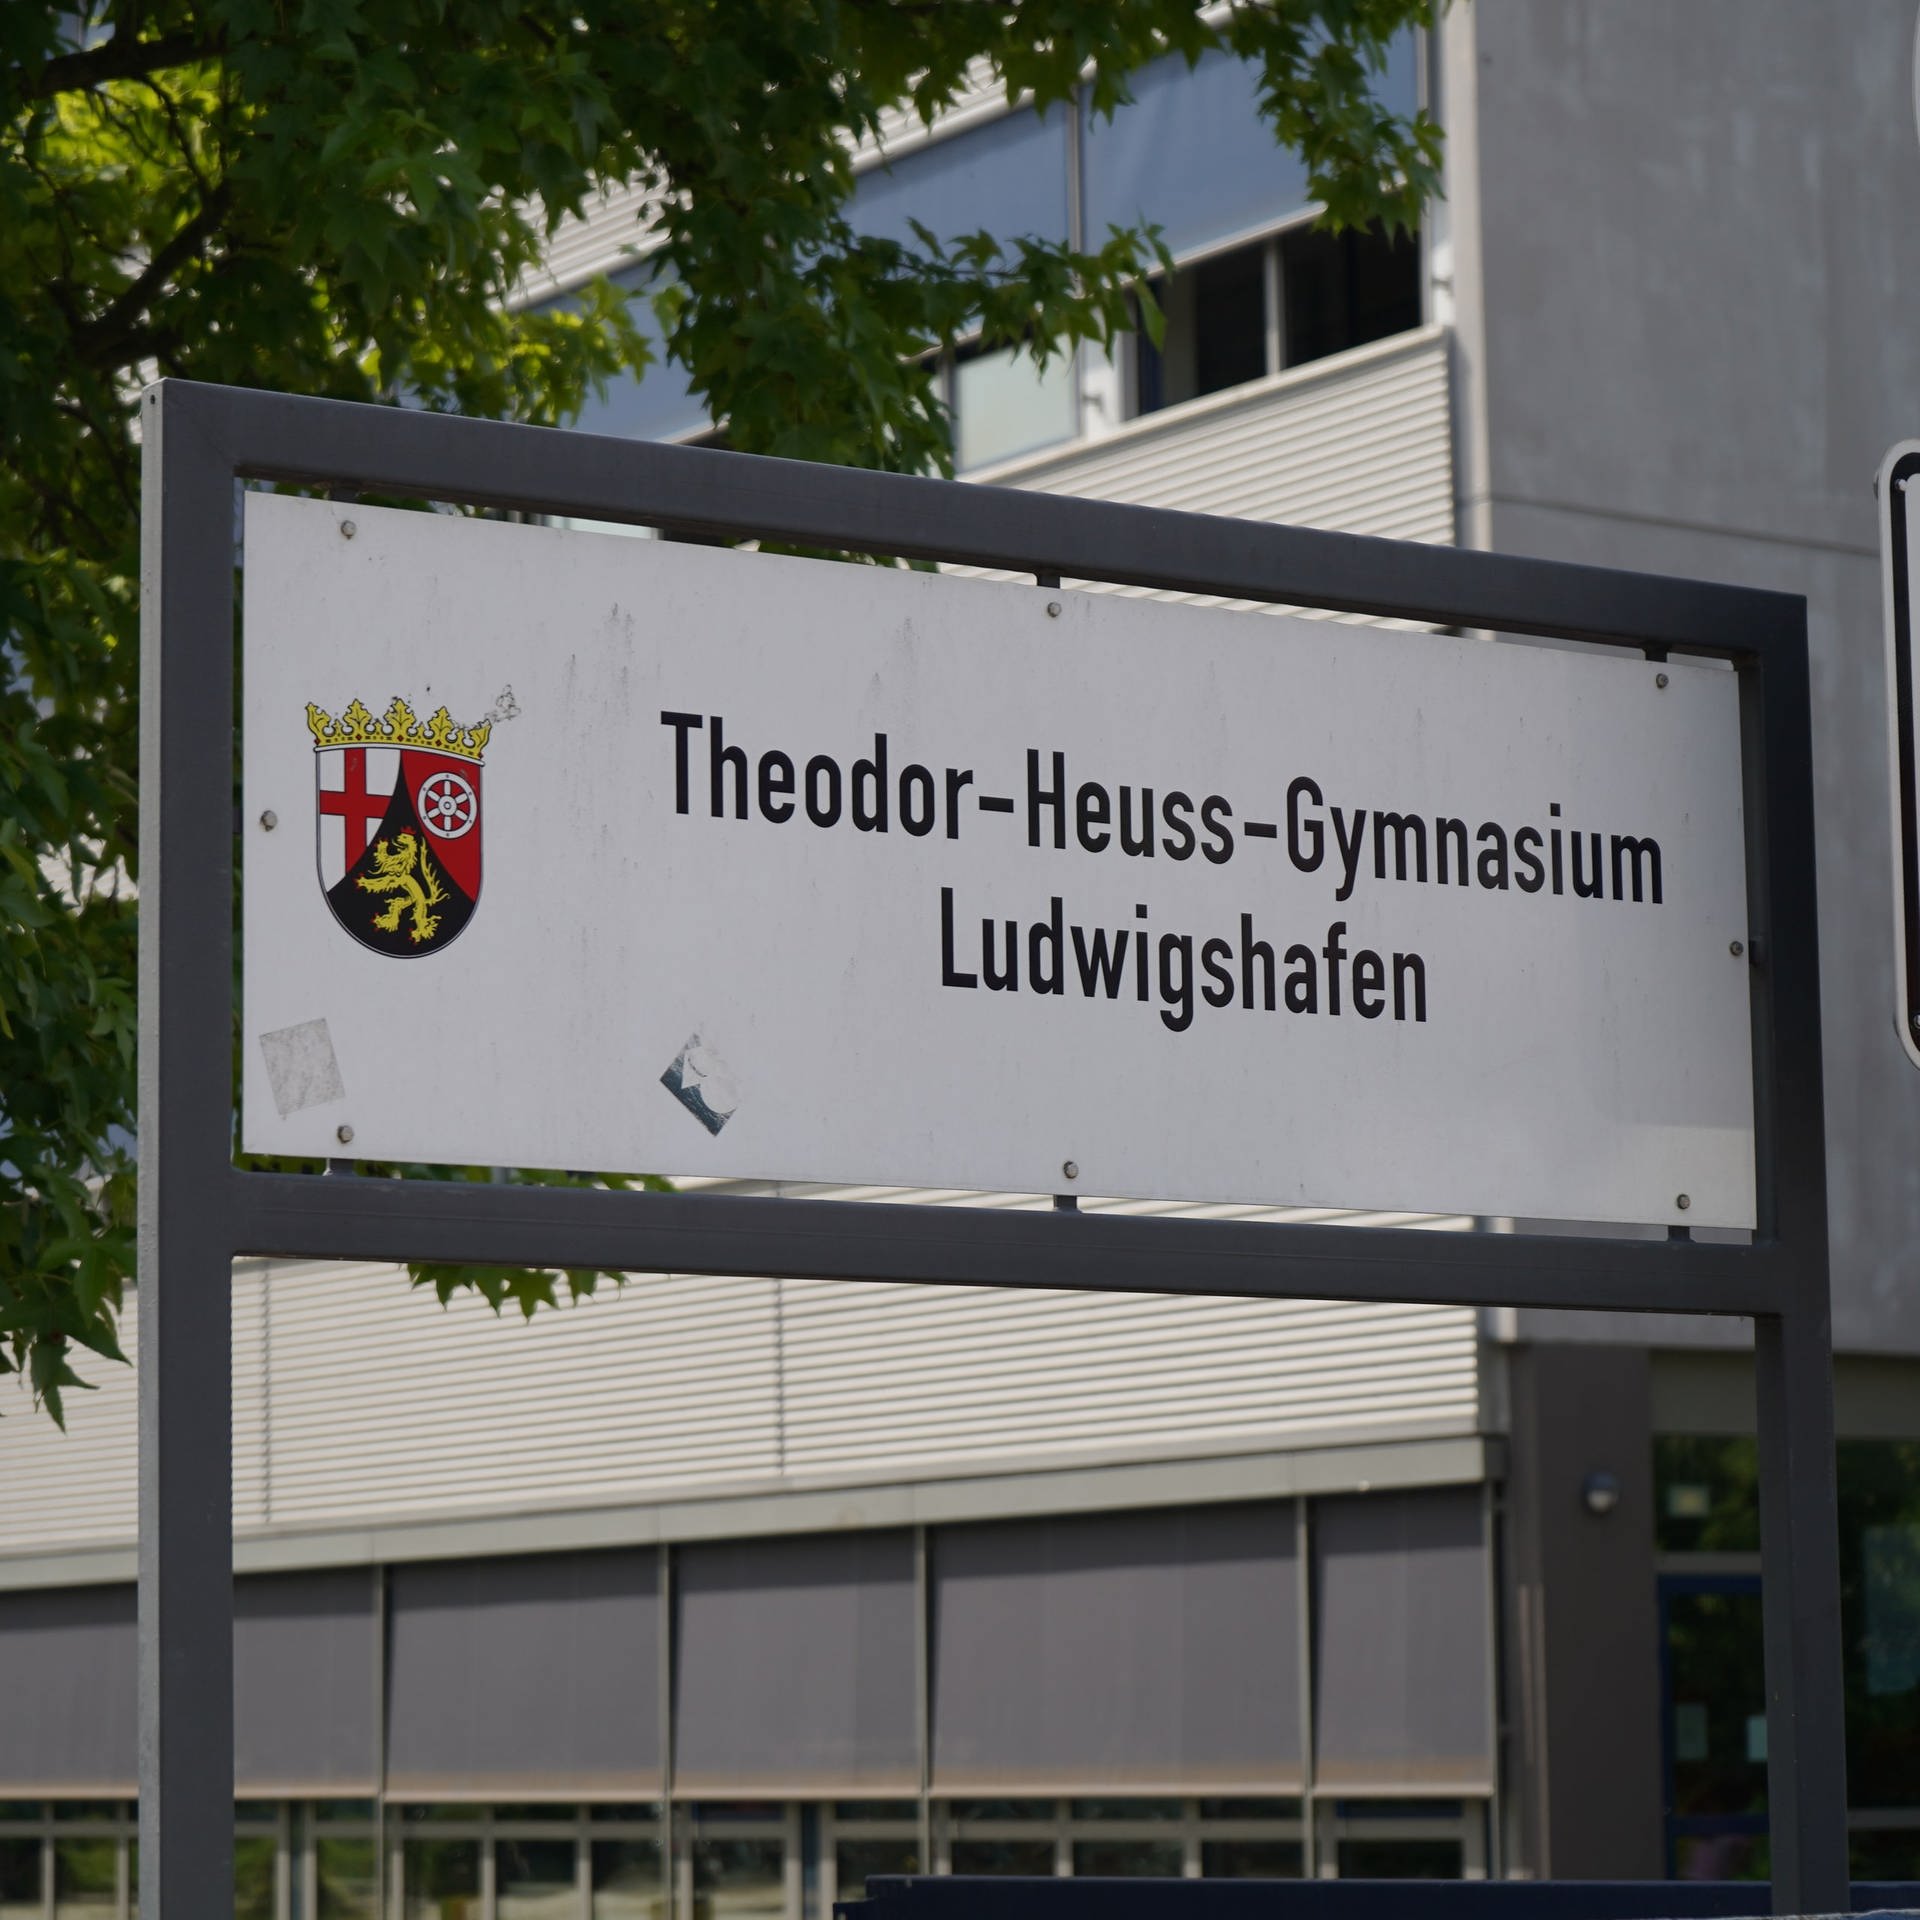 Theodor-Heuss-Gymnasium Ludwigshafen